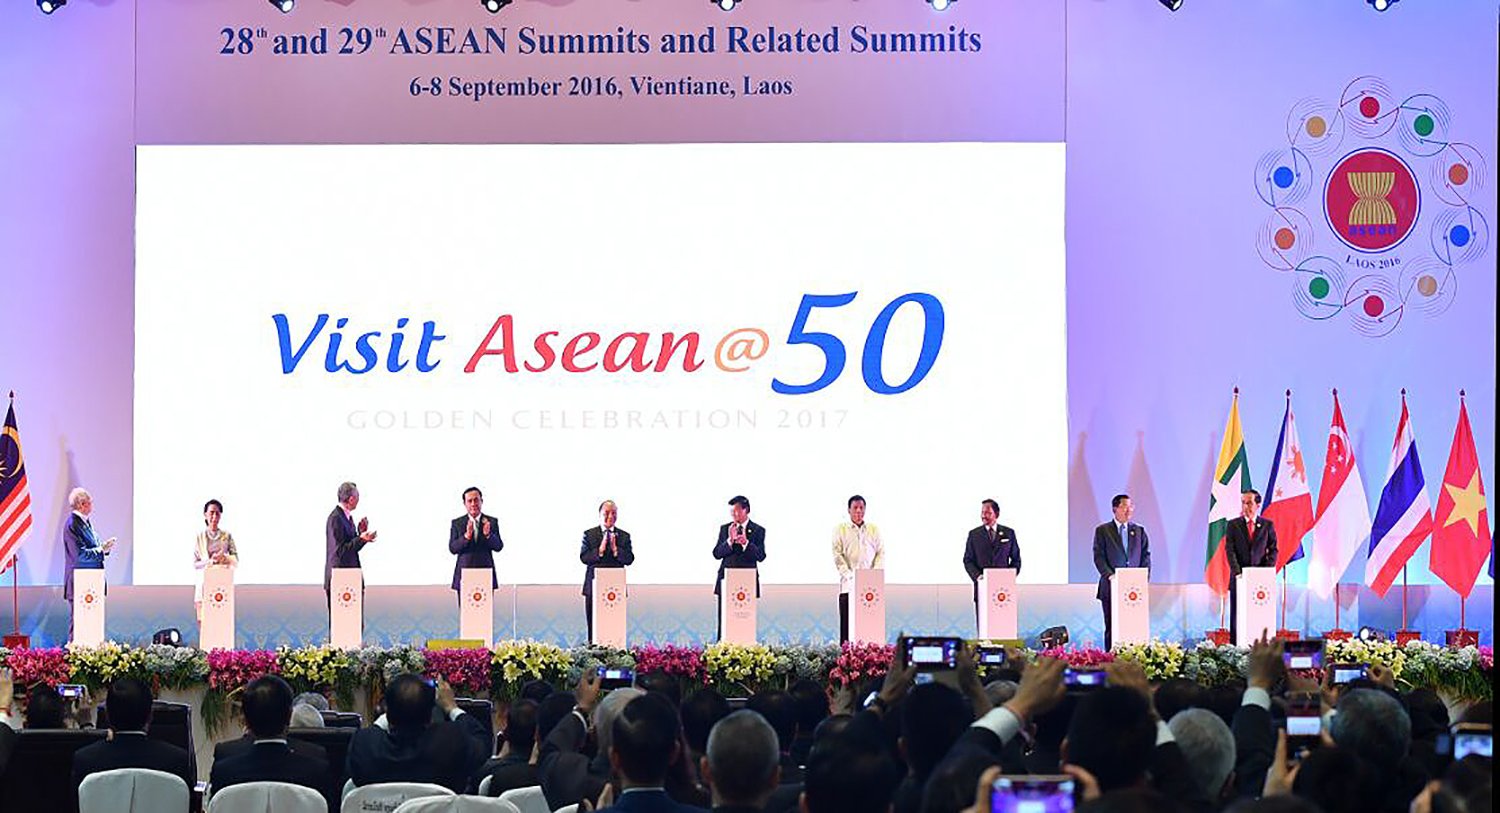 Presiden Joko Widodo mengikuti pembukaan ASEAN Summit ke-28 dan 29 di Vientiane, Laos, Selasa (6/9).